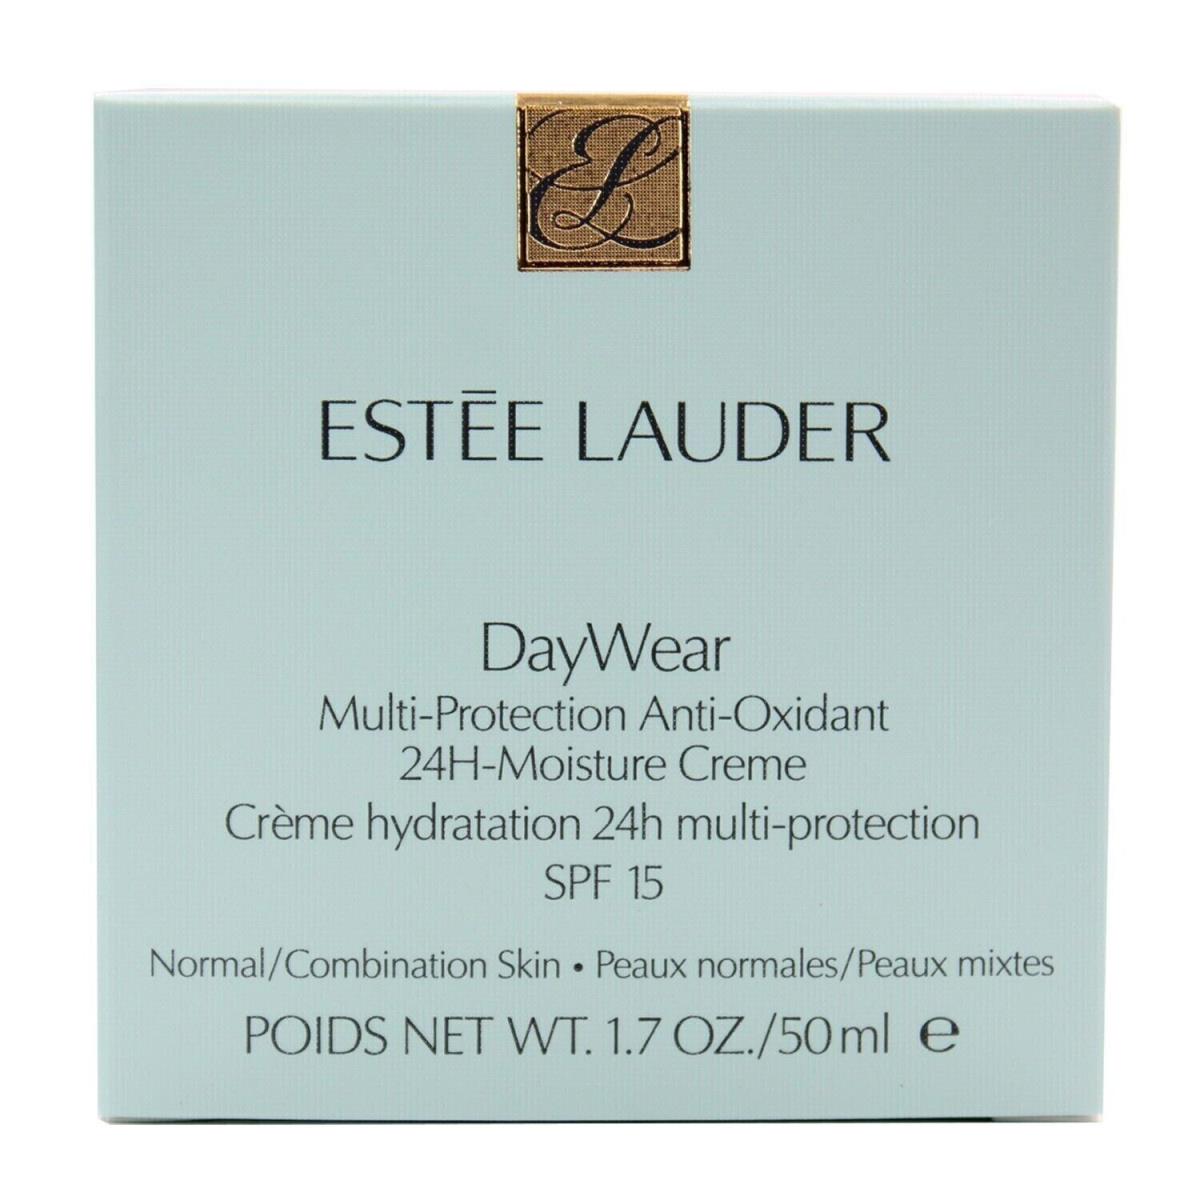 Estee Lauder Daywear Multi Protection Anti-oxidant Creme Spf 15 - 1.7oz/50ml